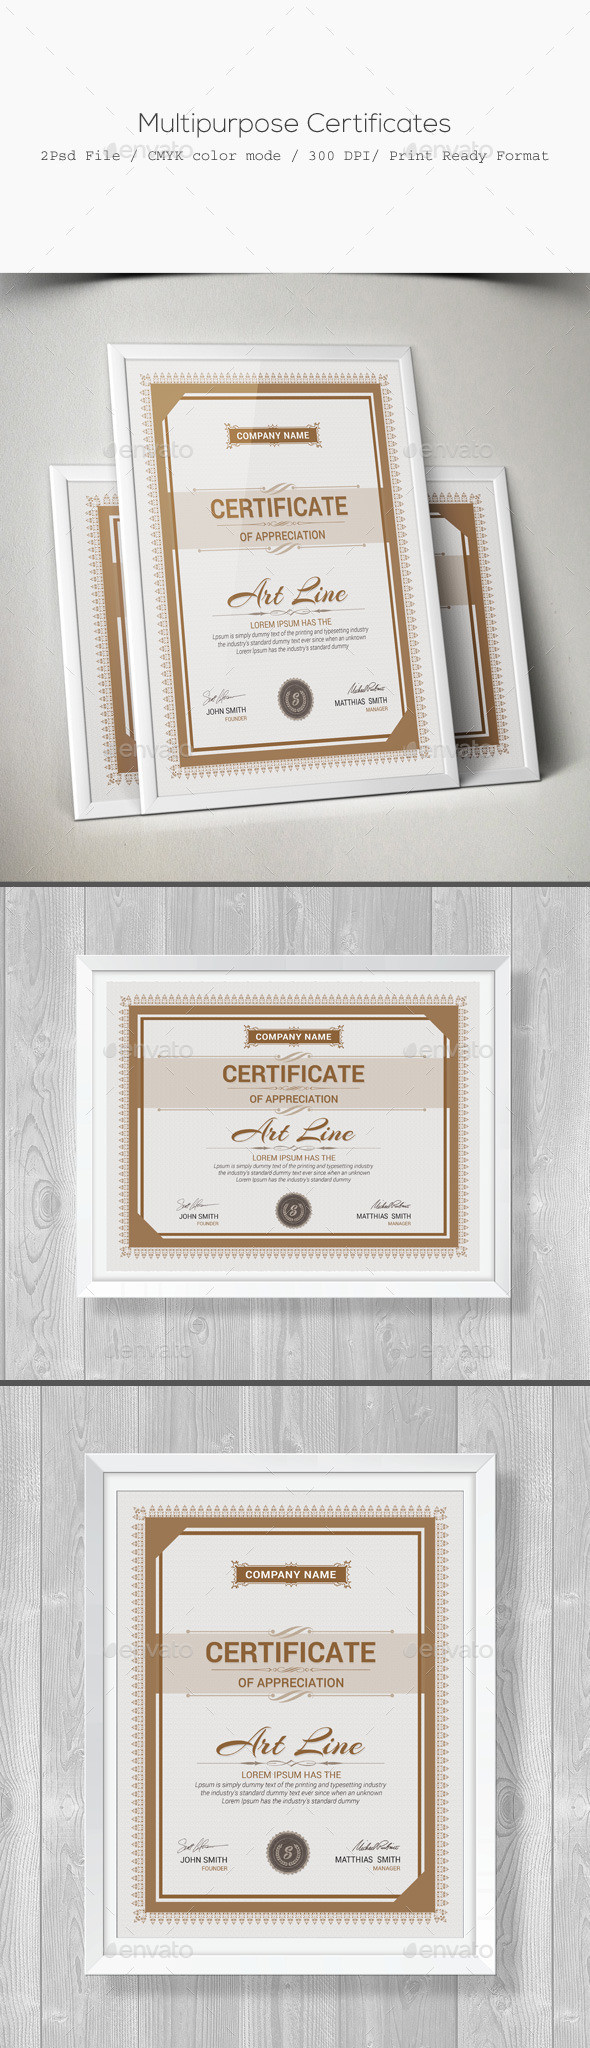 Multipurpose certificates preview